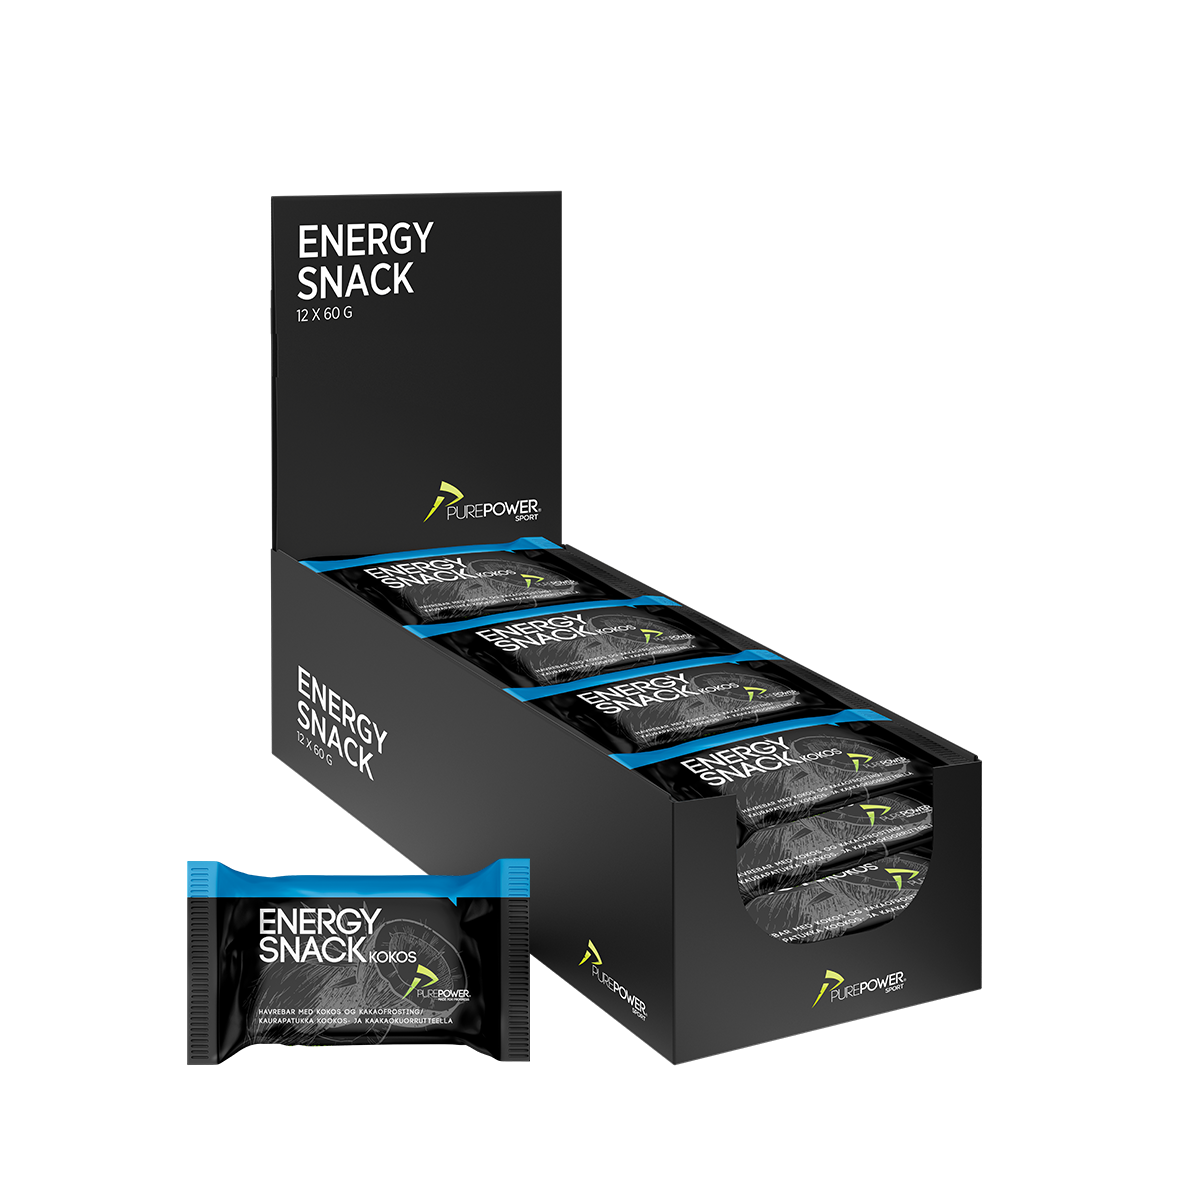 Billede af Energy Snack Kokos 12x60 g hos PurePower